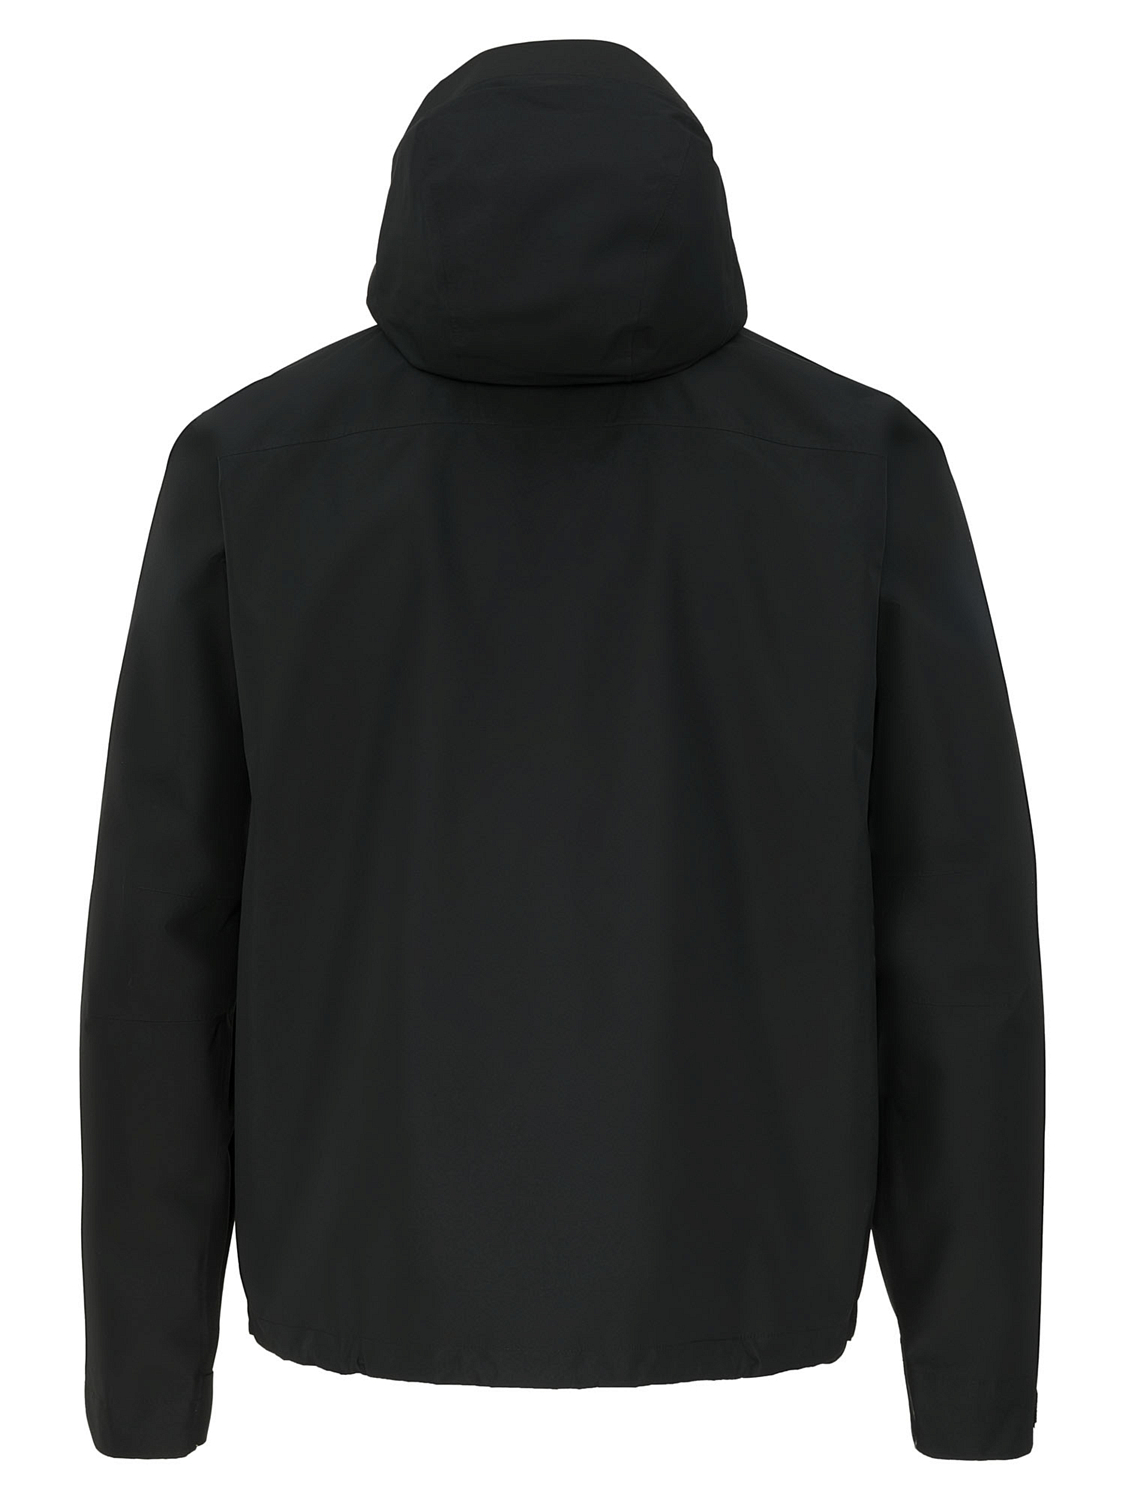 Куртка Marmot Minimalist Black